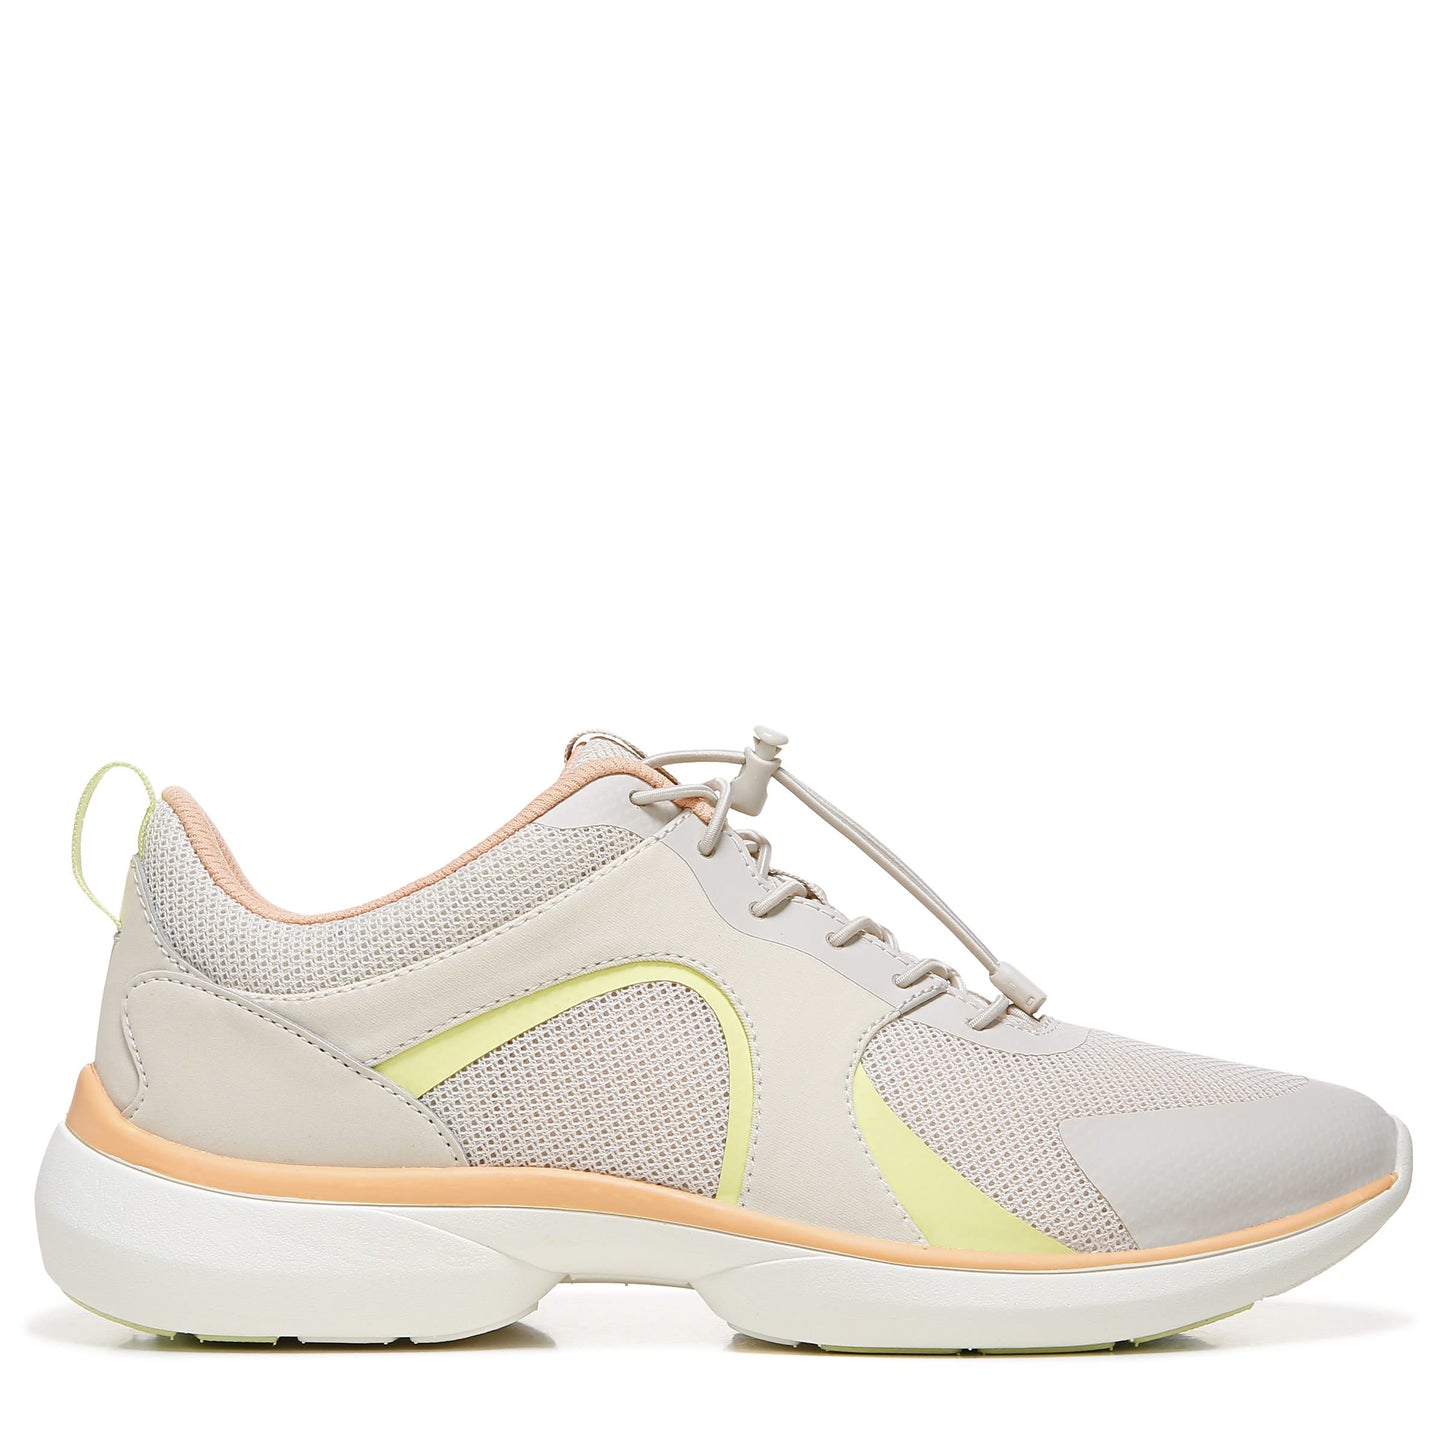 Vionic Olessa Women's Supportive Walking/Athletic Shoe, Cream/Apricot, 10